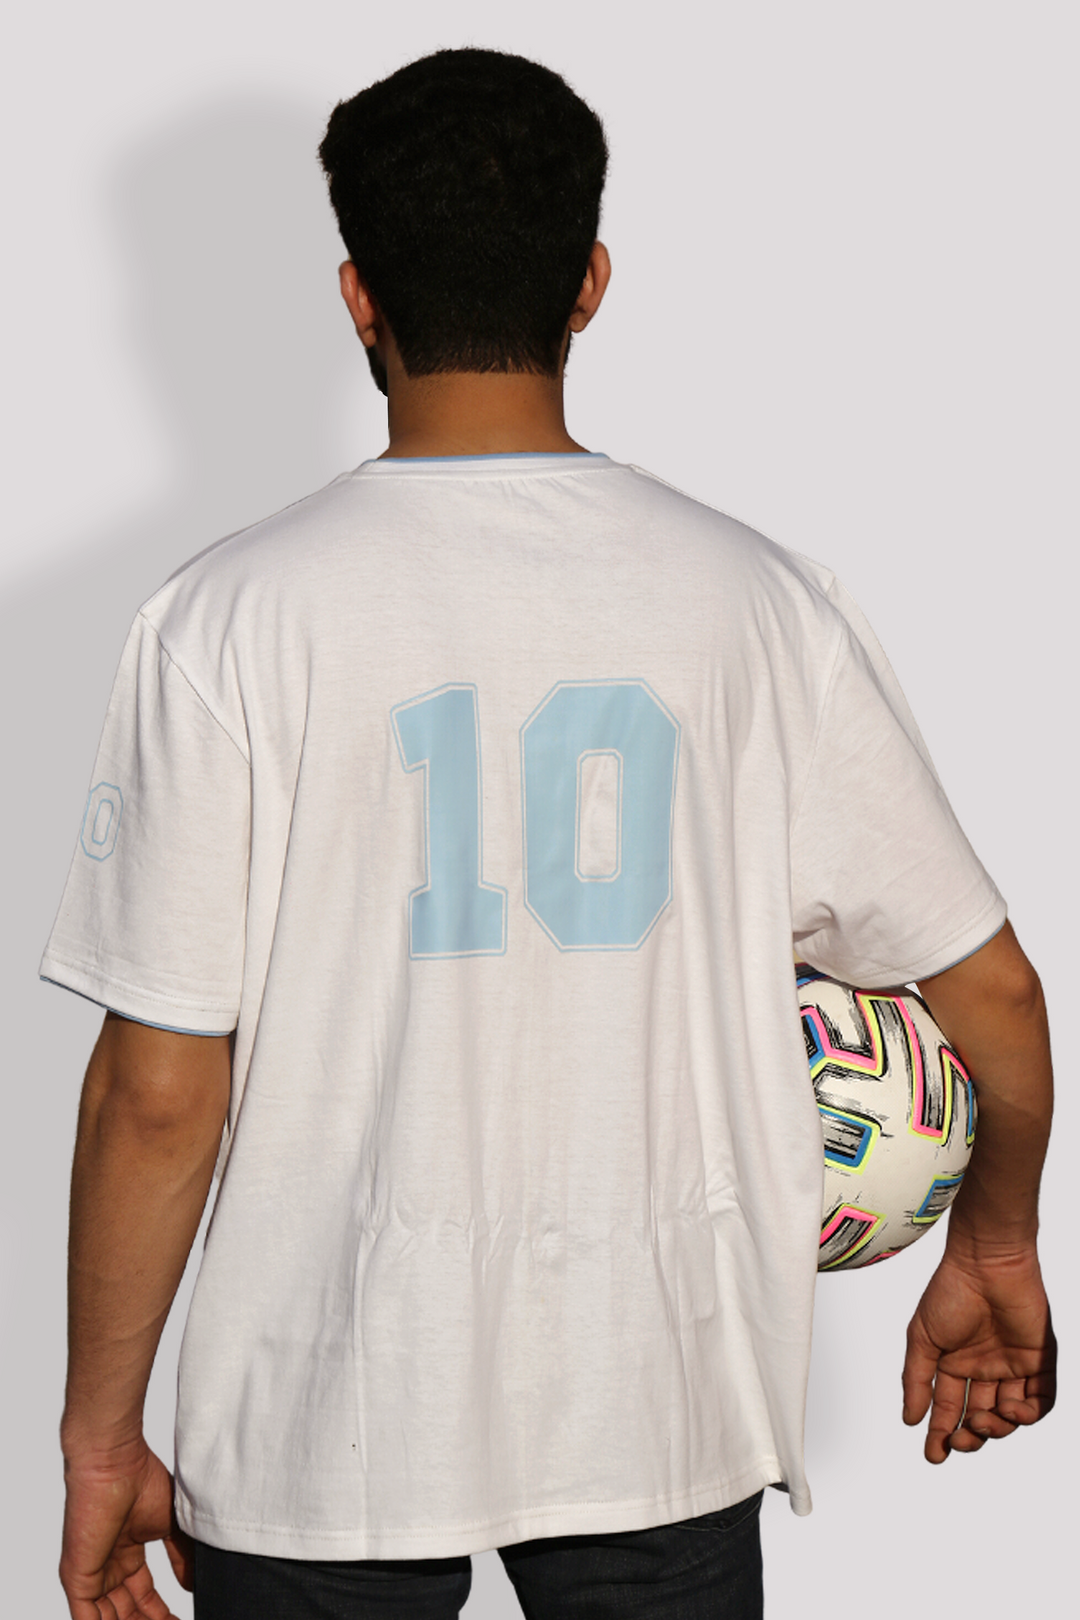 Football Tshirt Limited Edition - Argentina